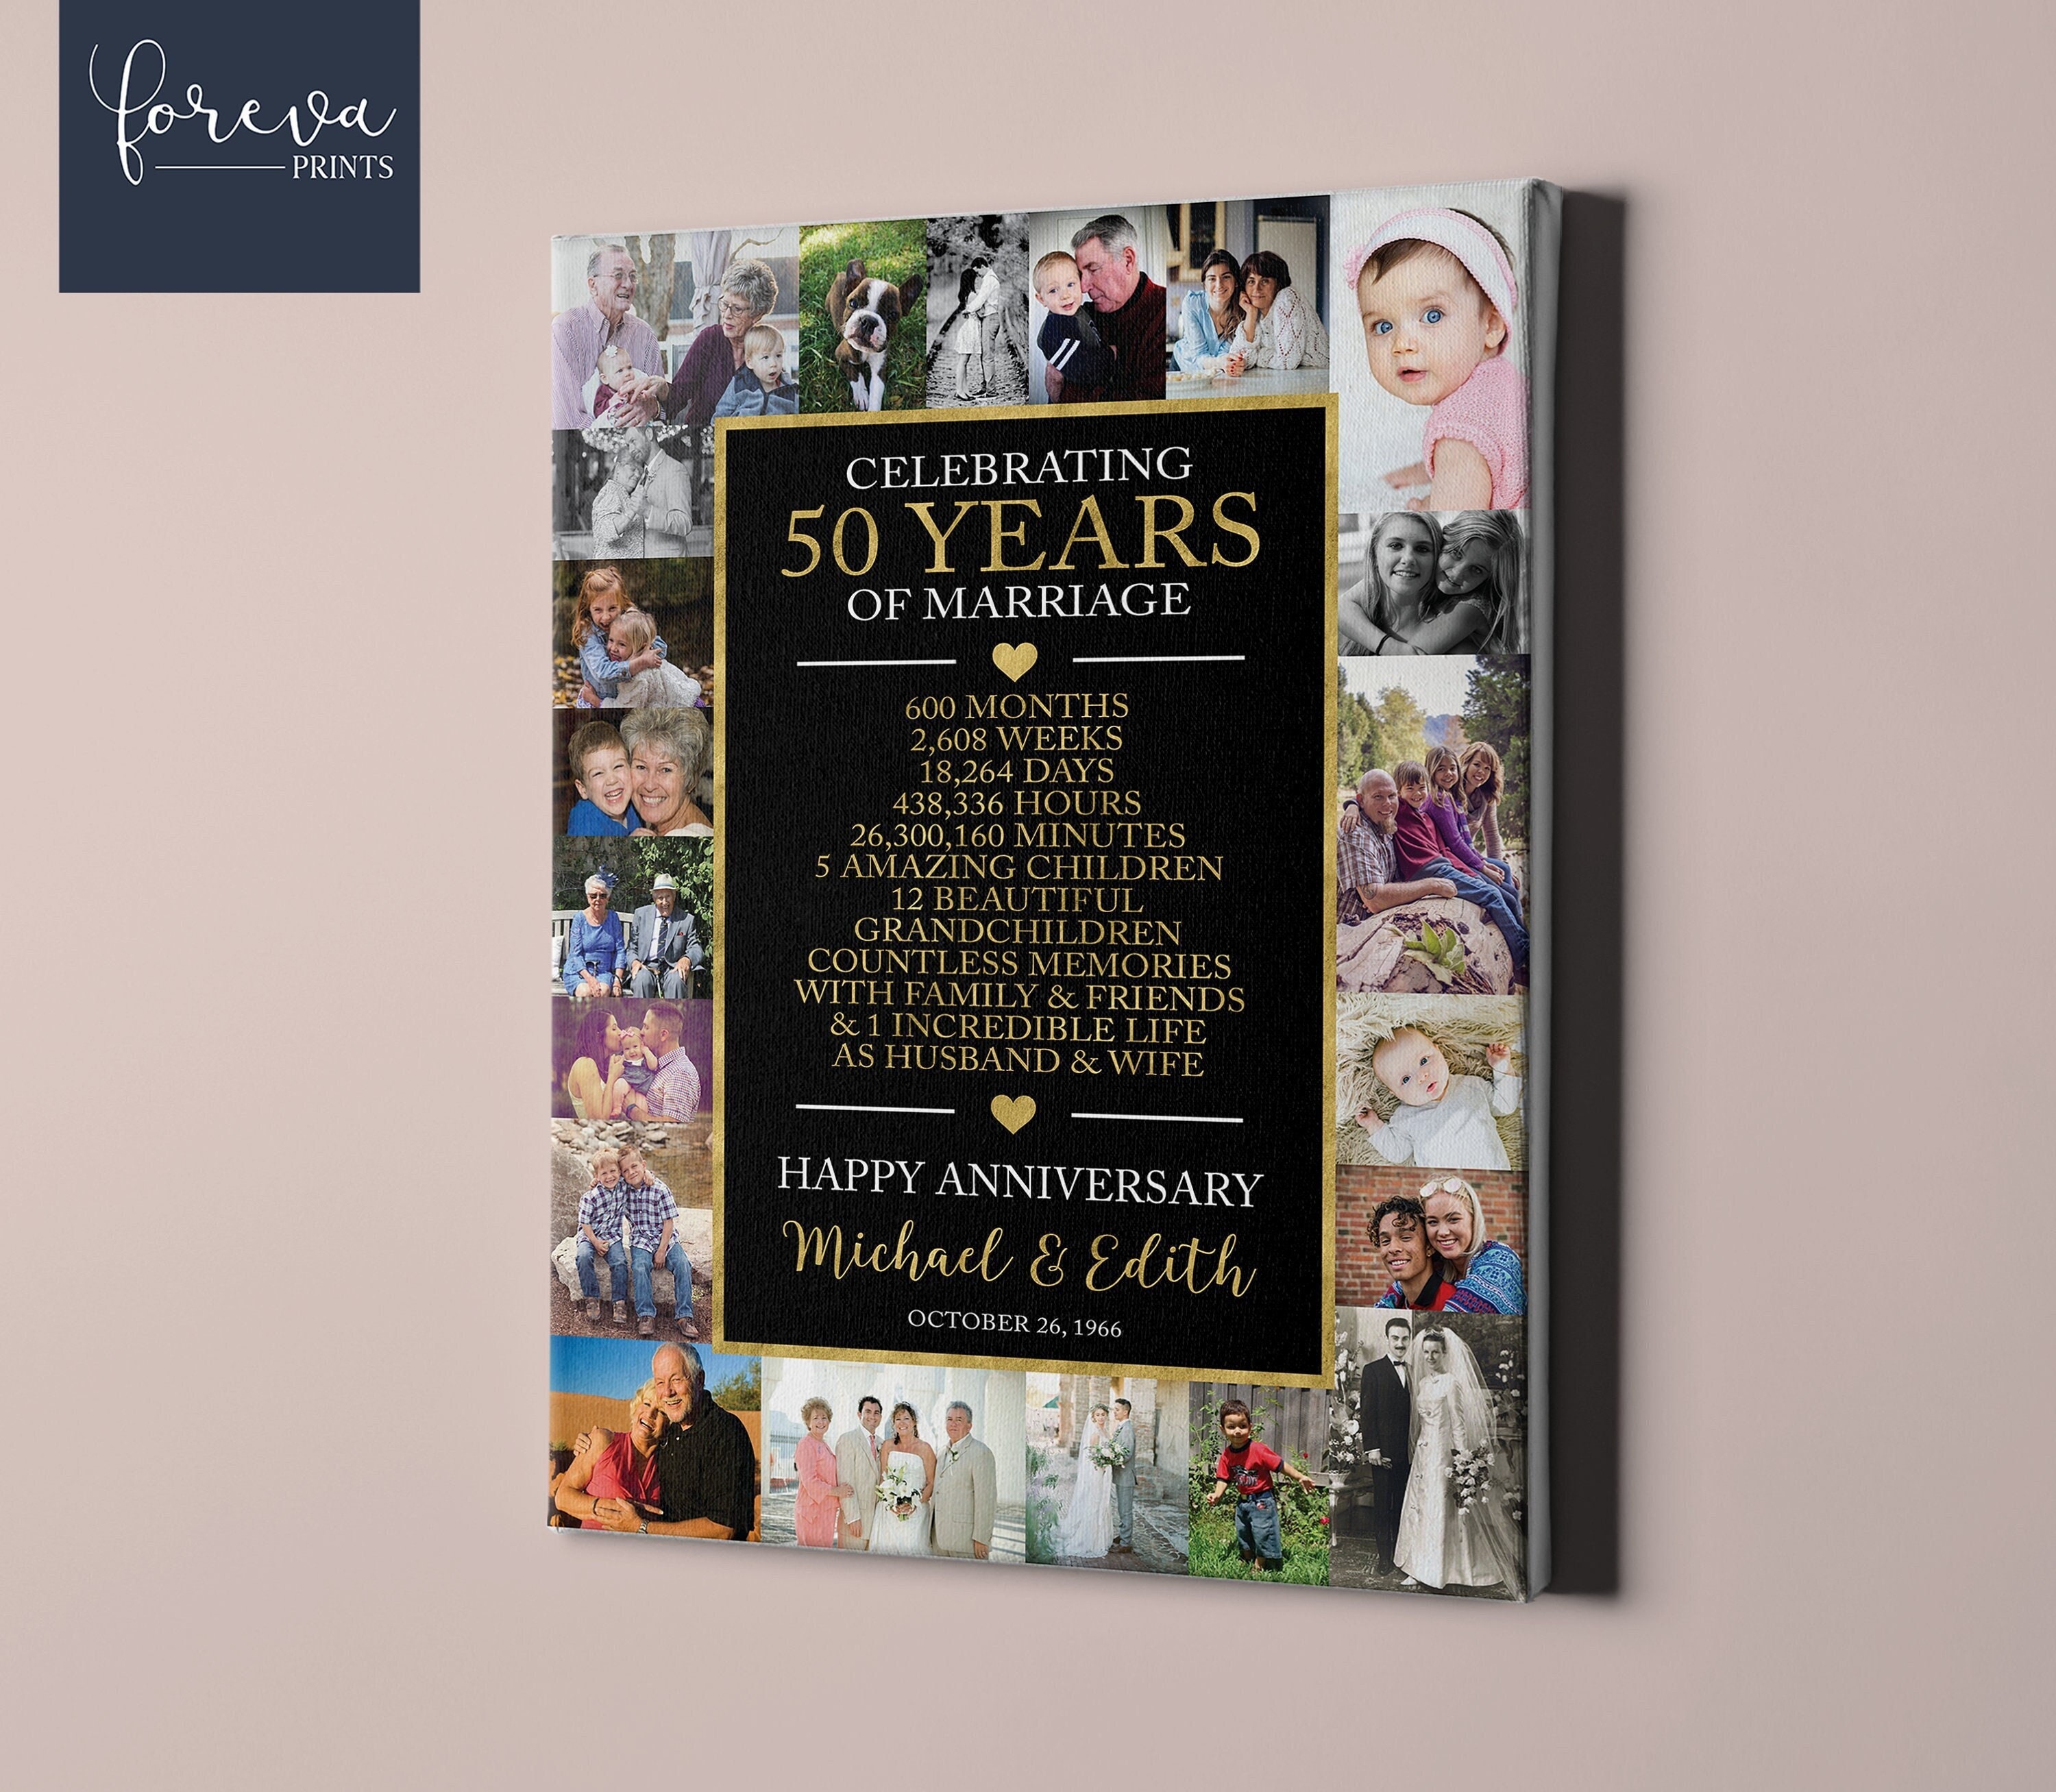 Libro de firmas para bodas de oro: Para recuerdos de invitados por  aniversario de boda de oro 50 años casados, Regalo o detalle para  aniversario